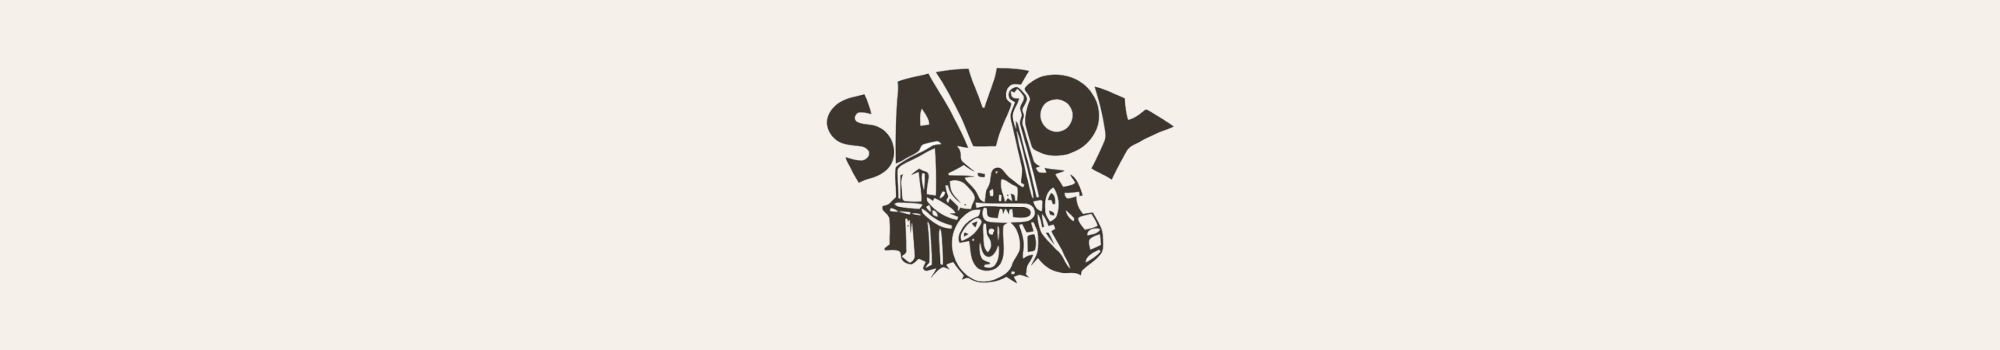 Savoy Records logotyp